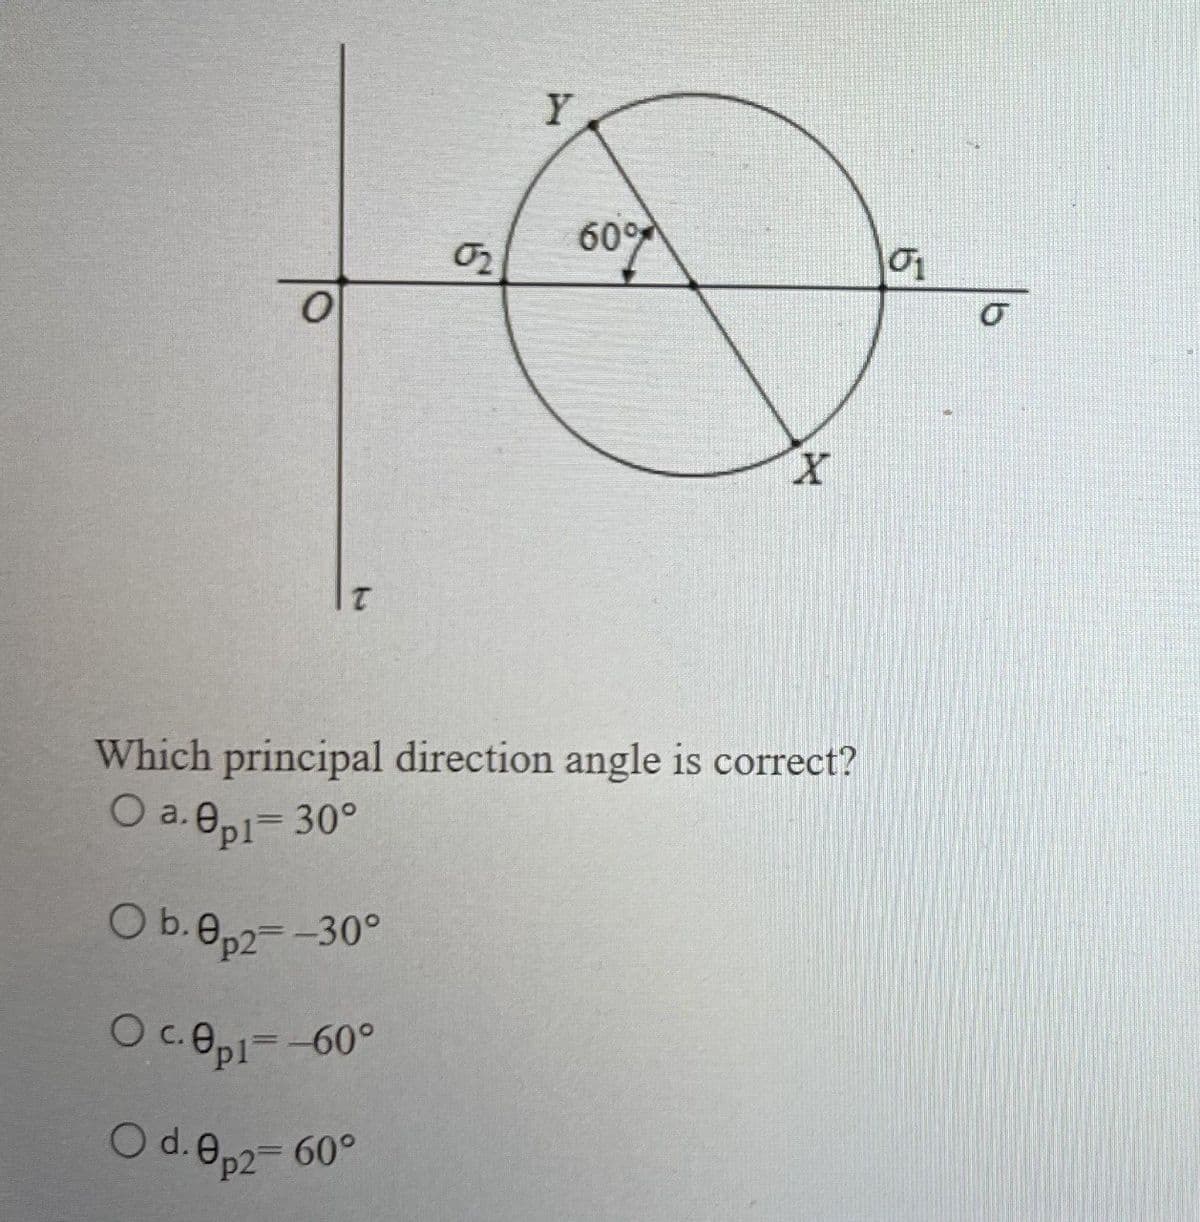 O
T
O b. 0p2=-30°
O c.0p1= -60°
02
O d. 0p2= 60°
Y
Which principal direction angle is correct?
O a. 0p₁= 30°
60%
X
01